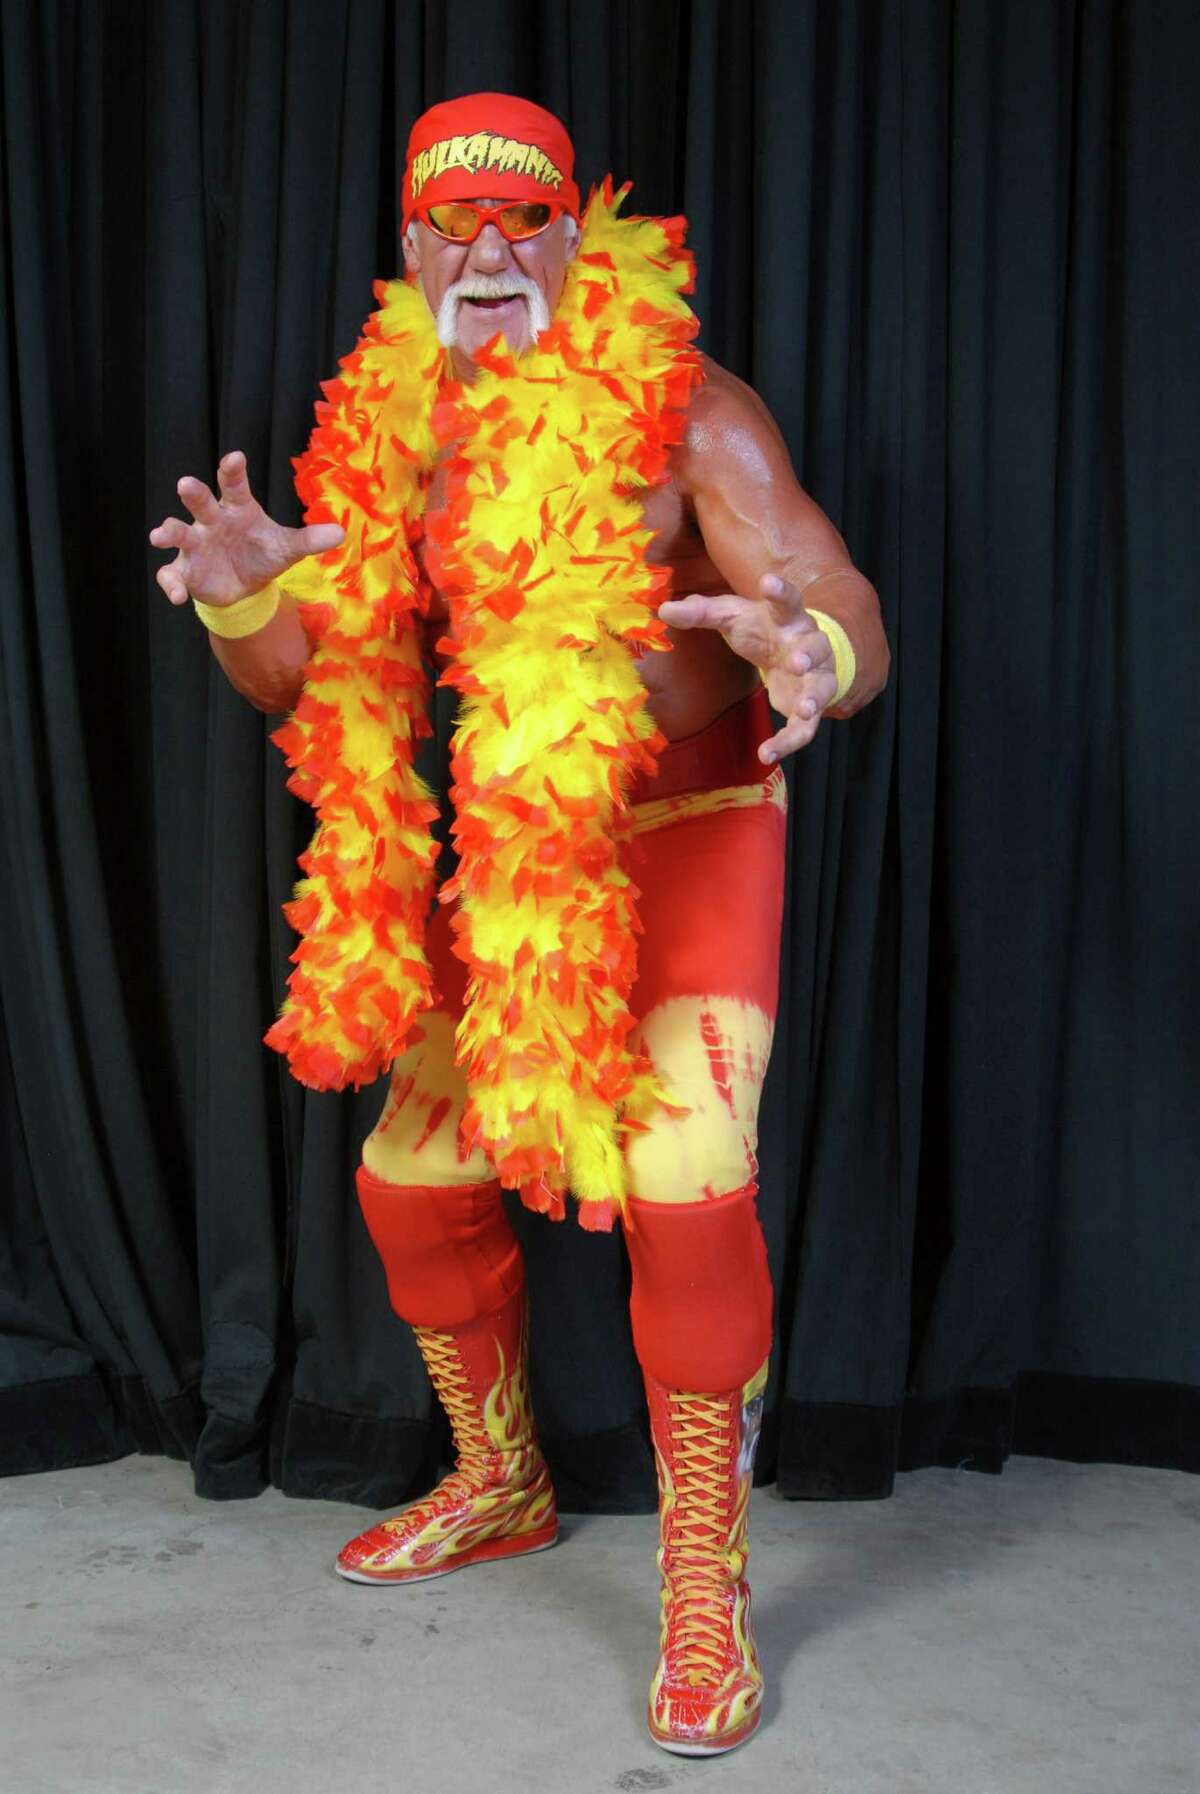 Hulk Hogan talks cancer awareness at AT&T Center